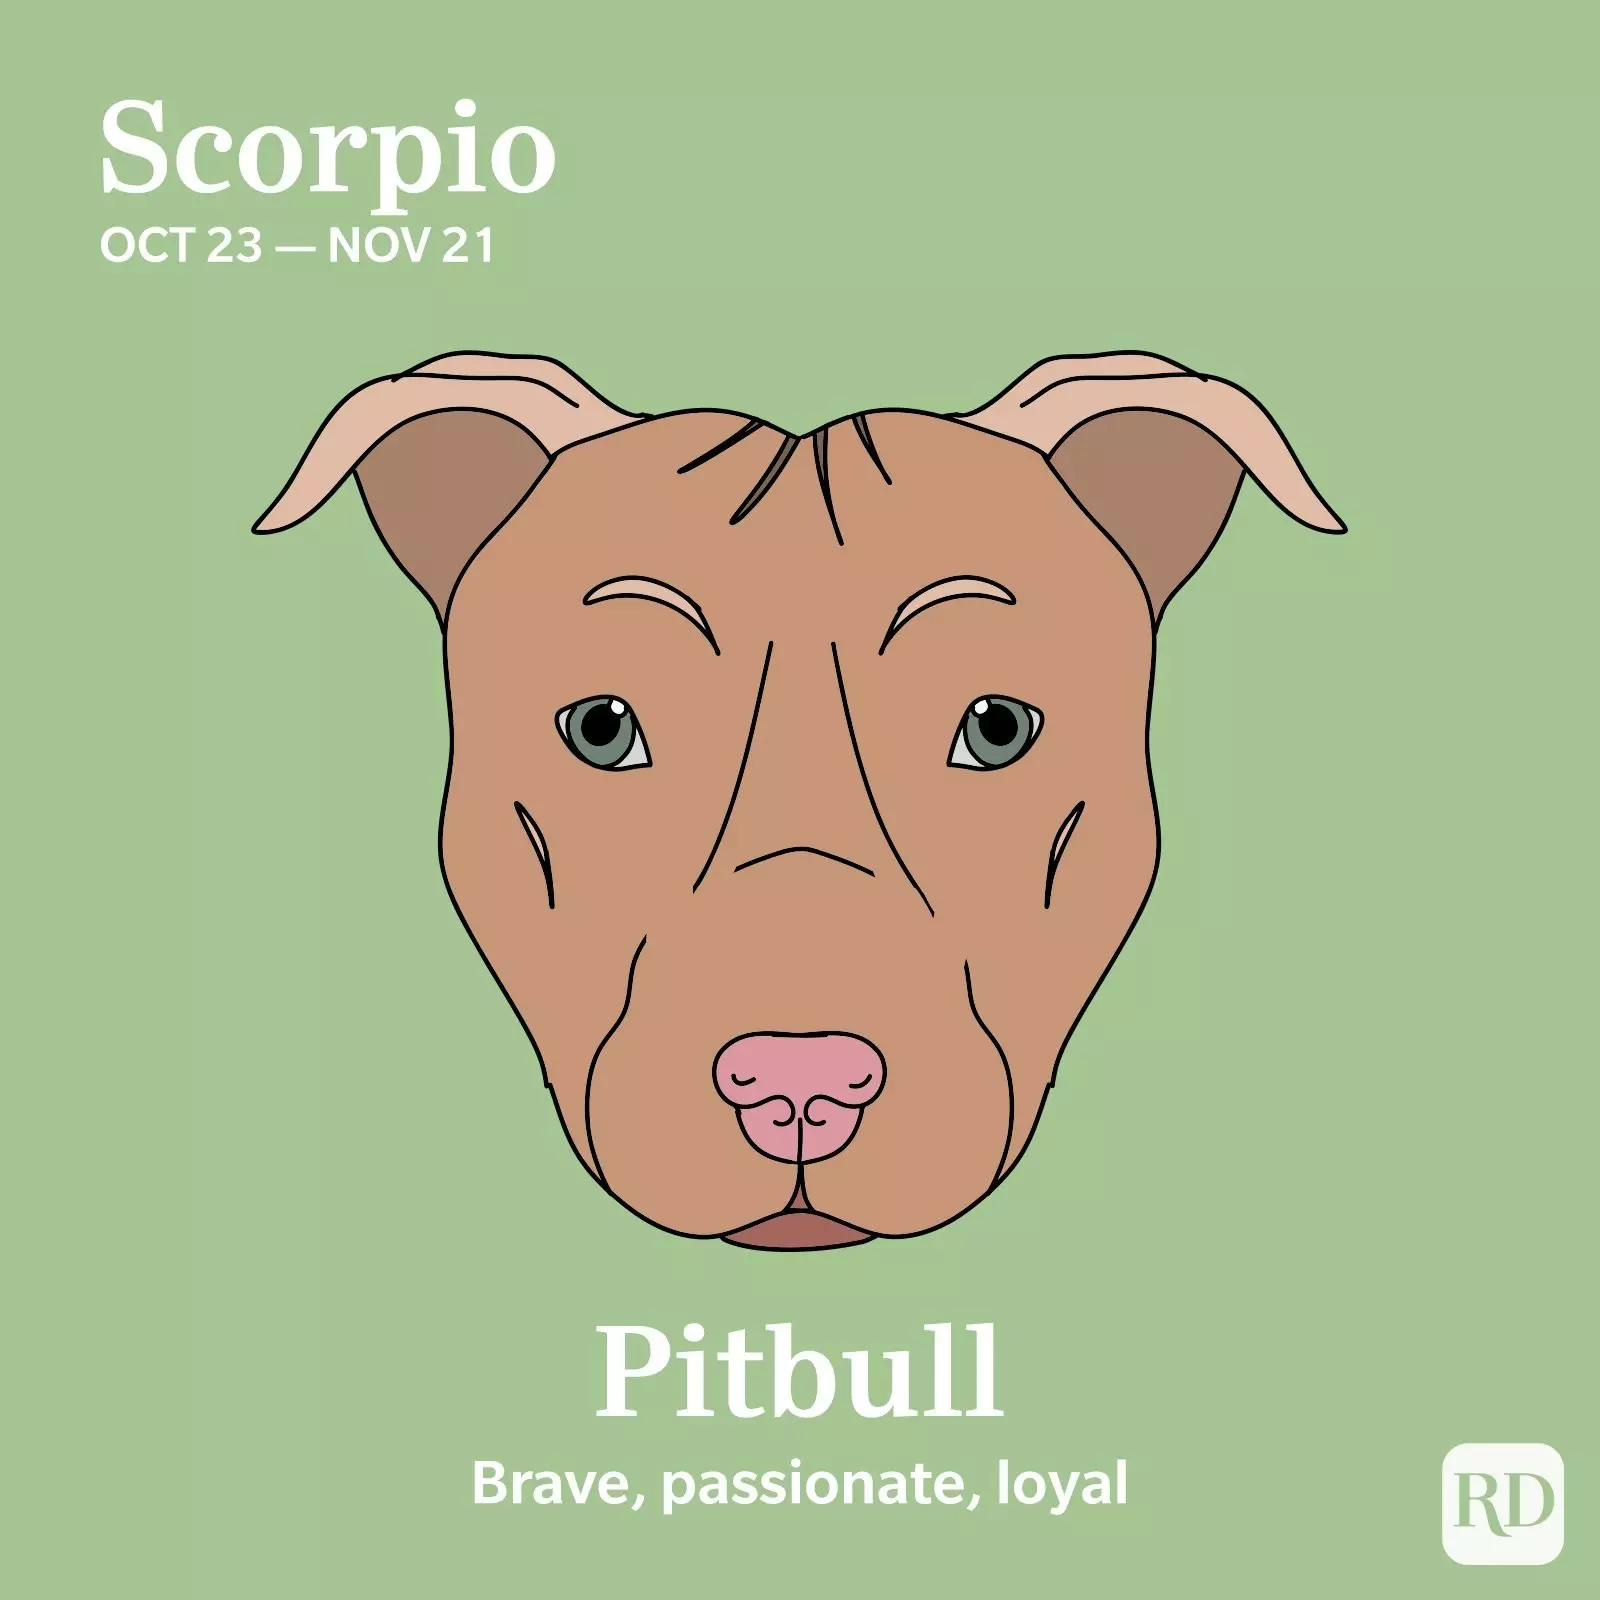 Scorpio: Pitbull